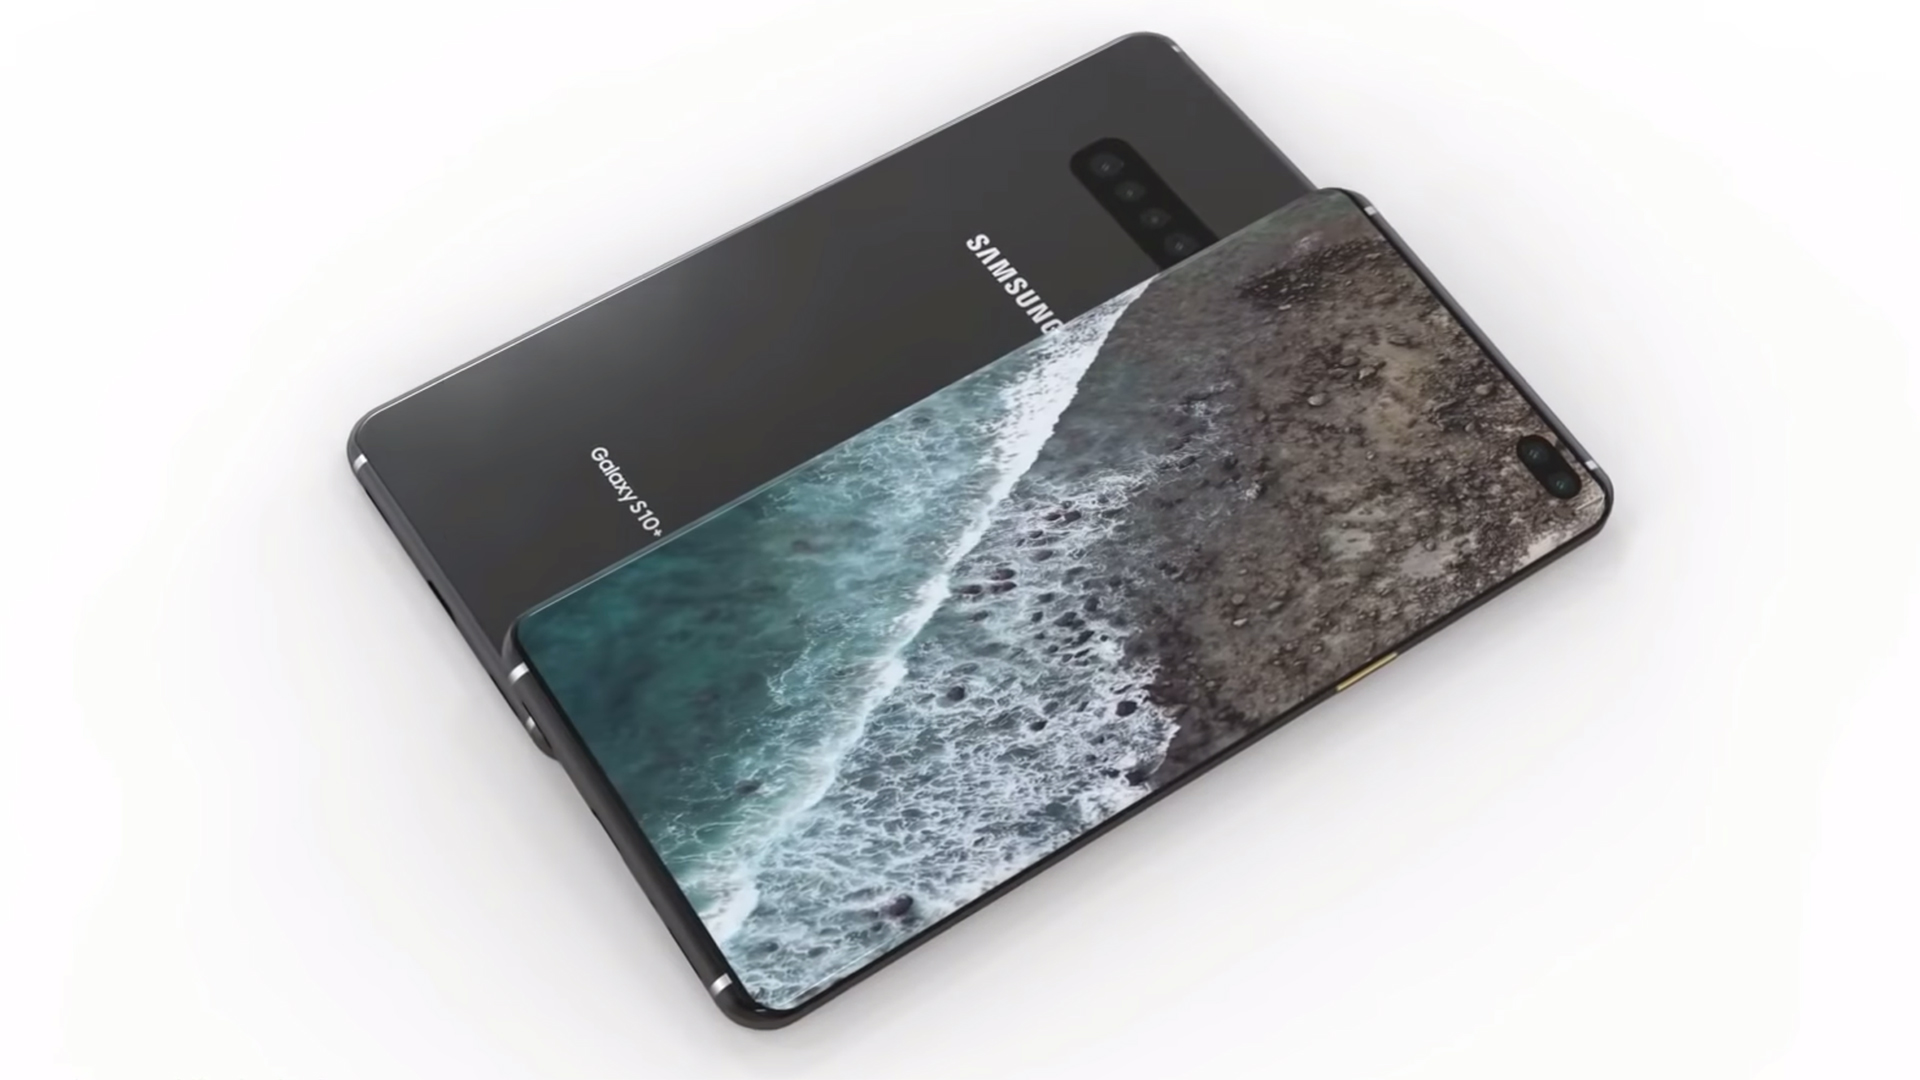 Samsung Galaxy Note 10 Plus Snapdragon 855